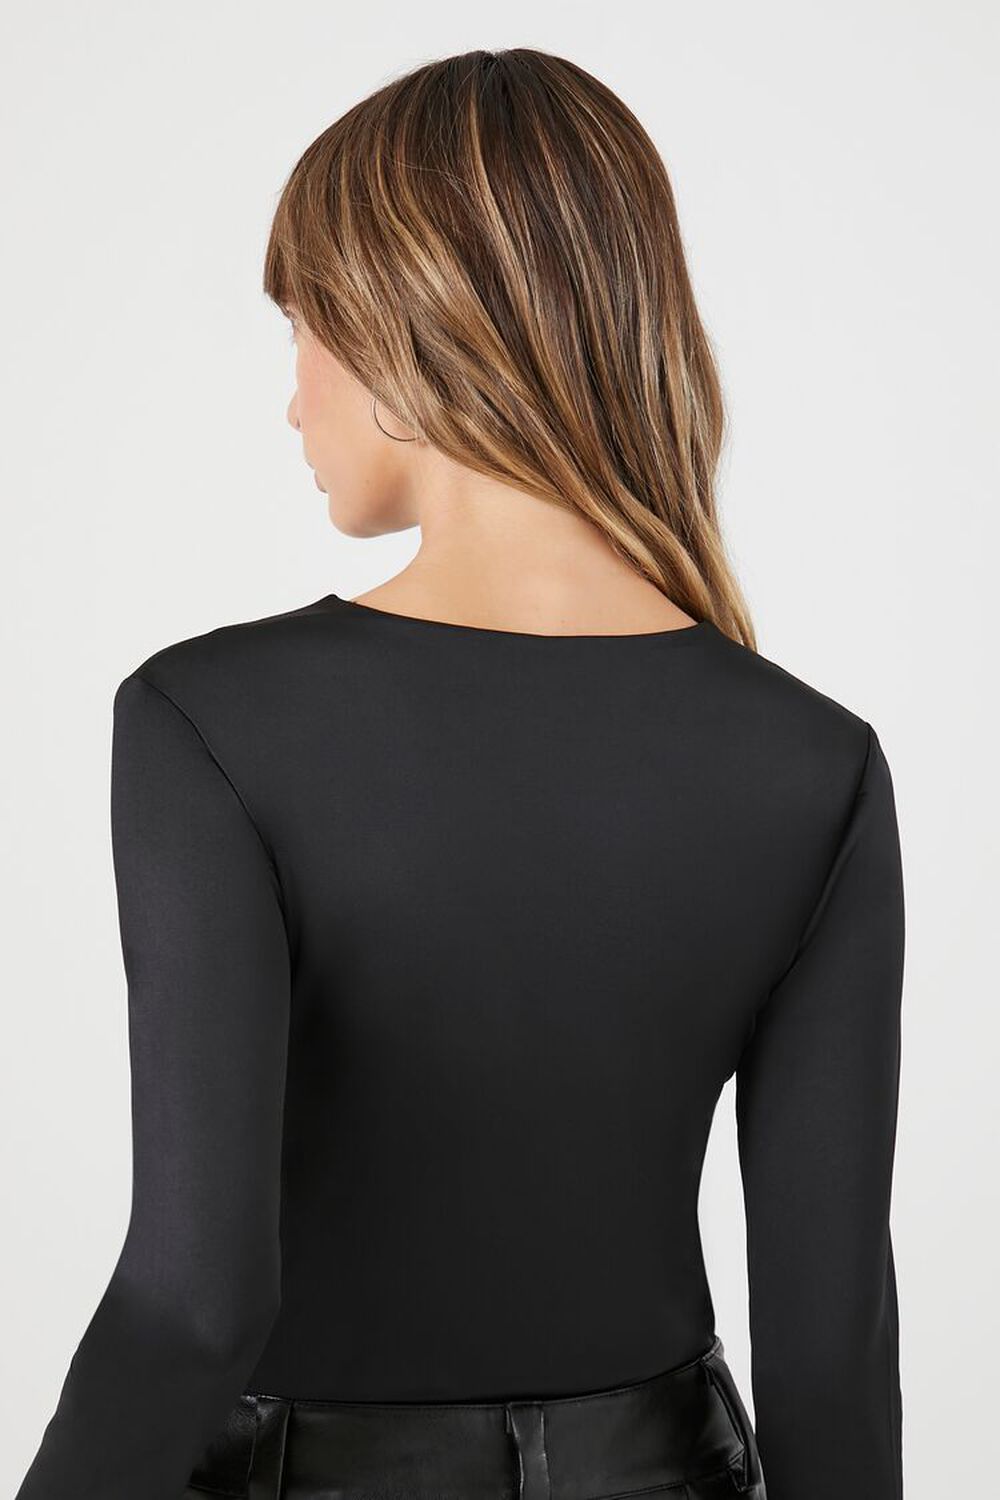 Forever 21 Women's Contour Long-Sleeve Bodysuit in Black, XL